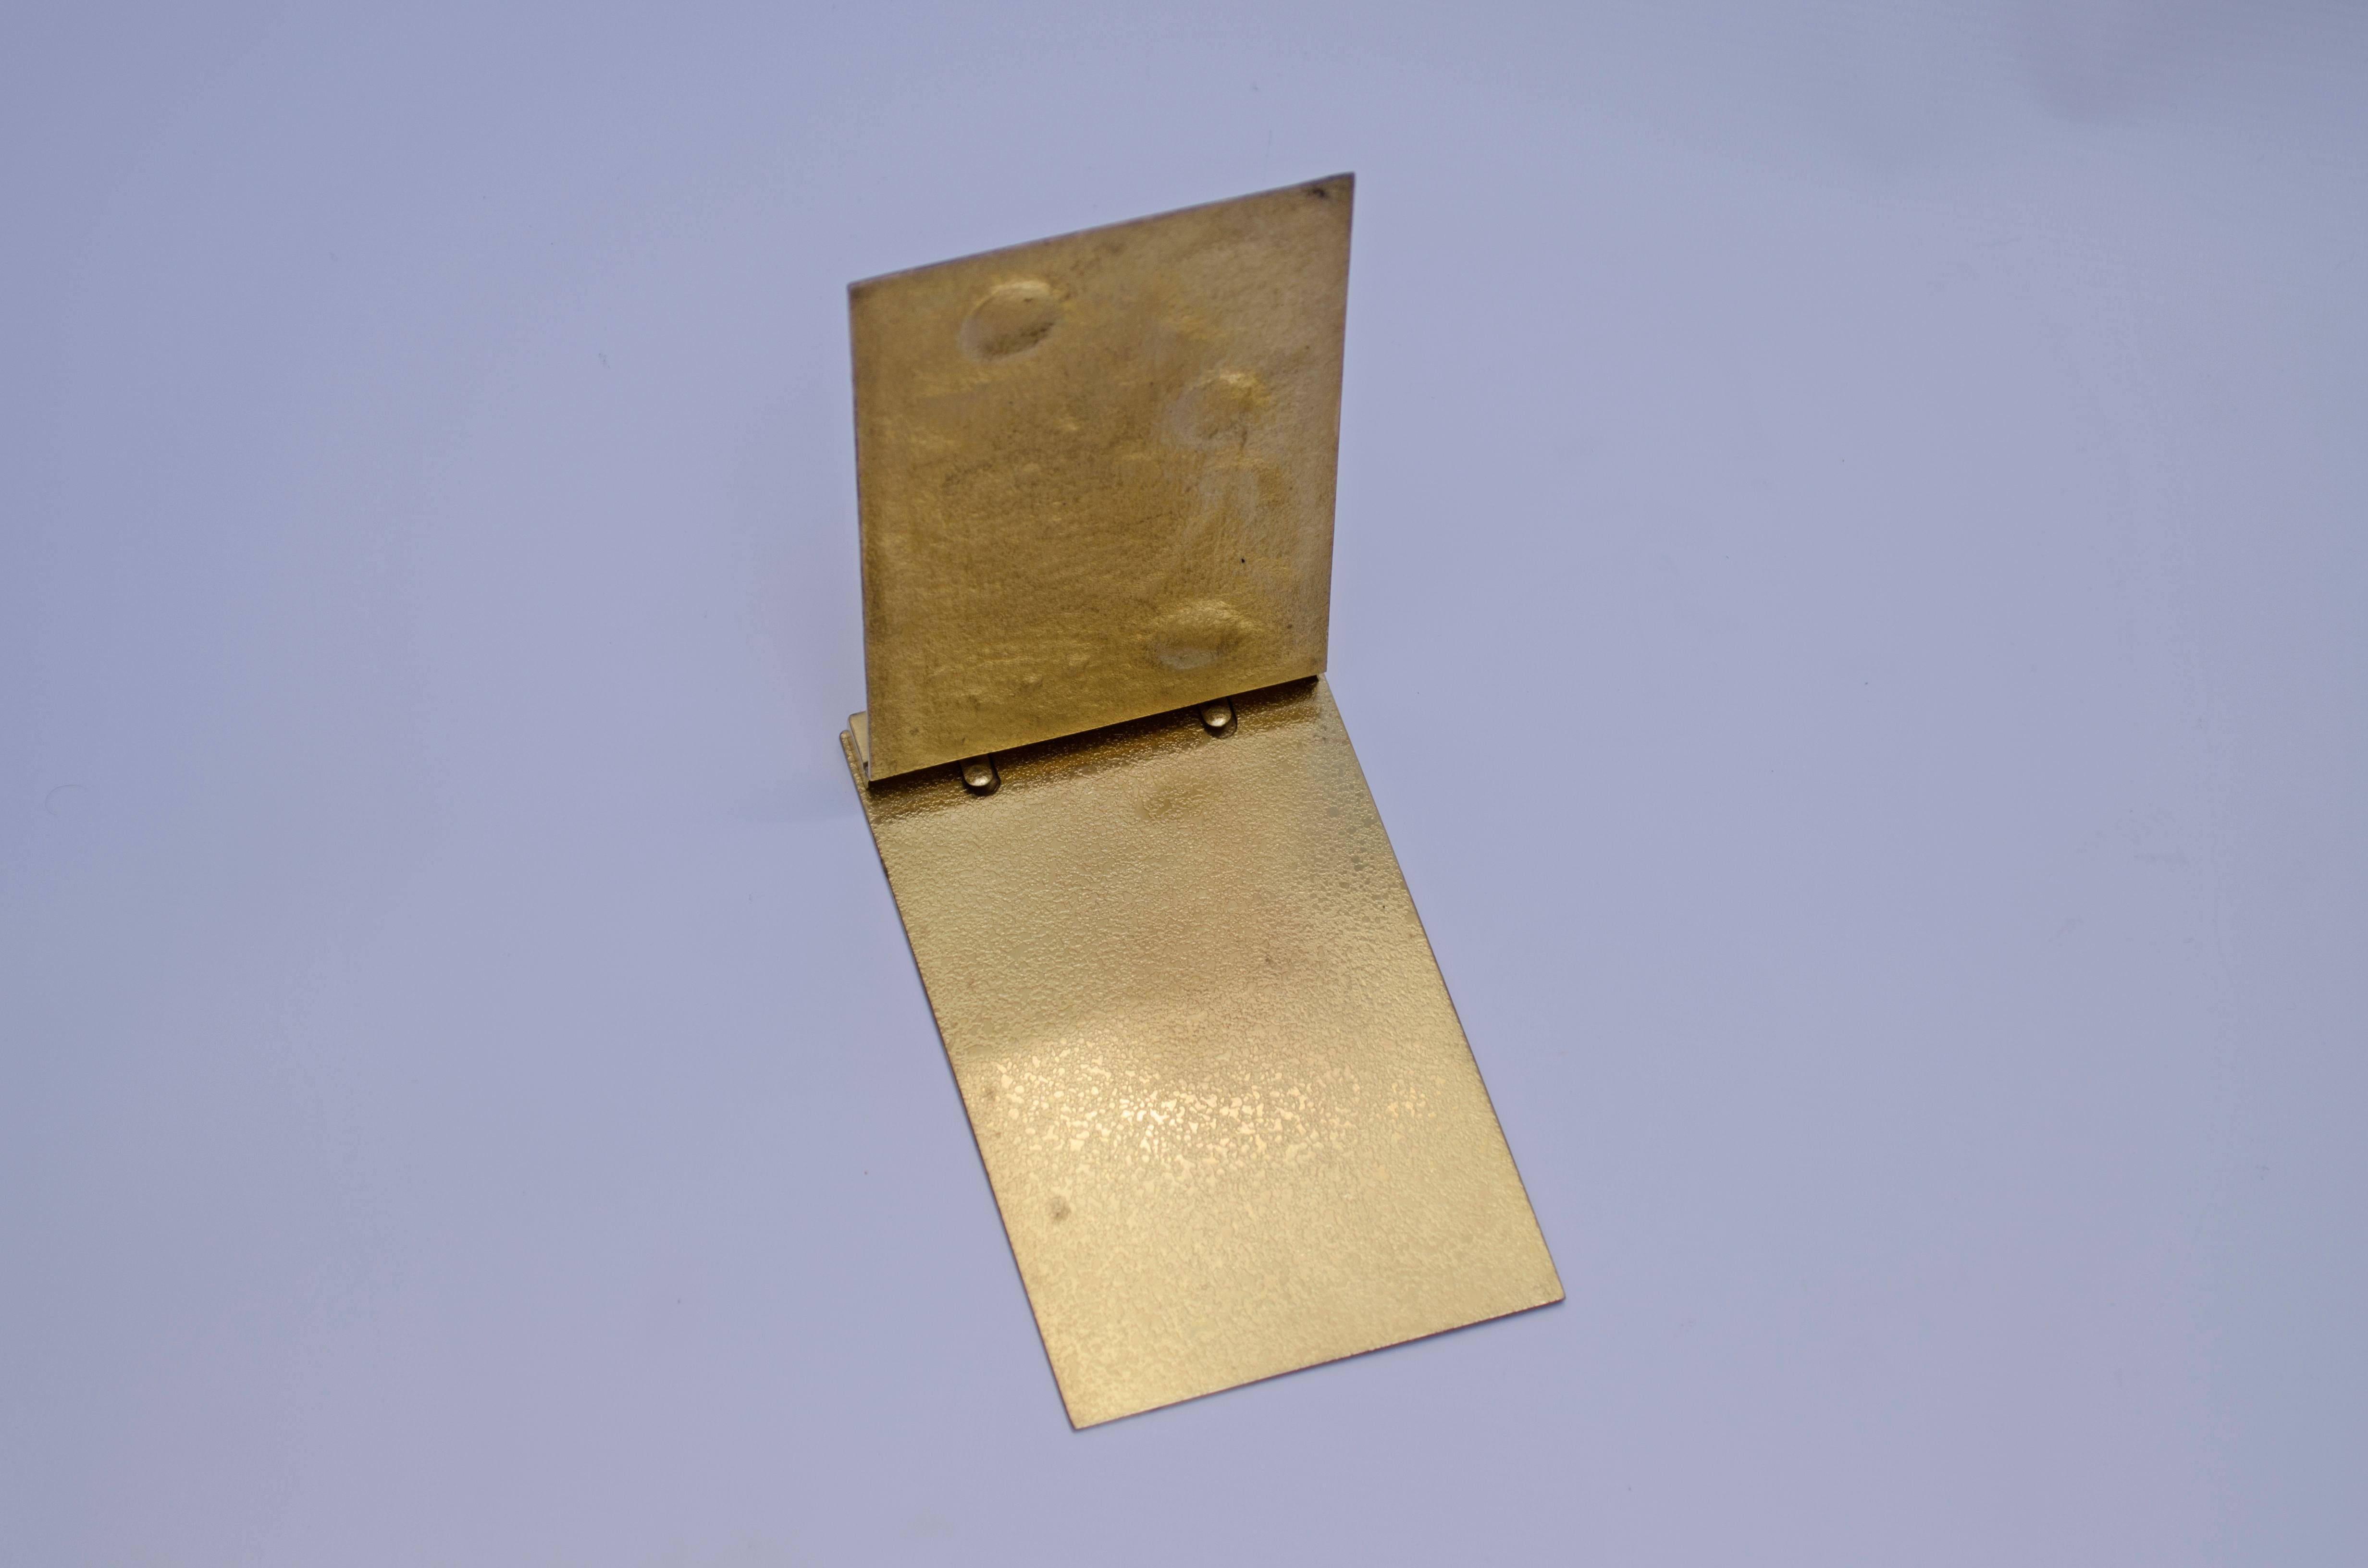 Desk paper holder made of gilded bronze (Ormolu), “Tree of Life” model, made by TIFFANY Studios.

Signed TIFFANY STUDIOS, NEW YORK, 1021

United States, CIRCA 1900.